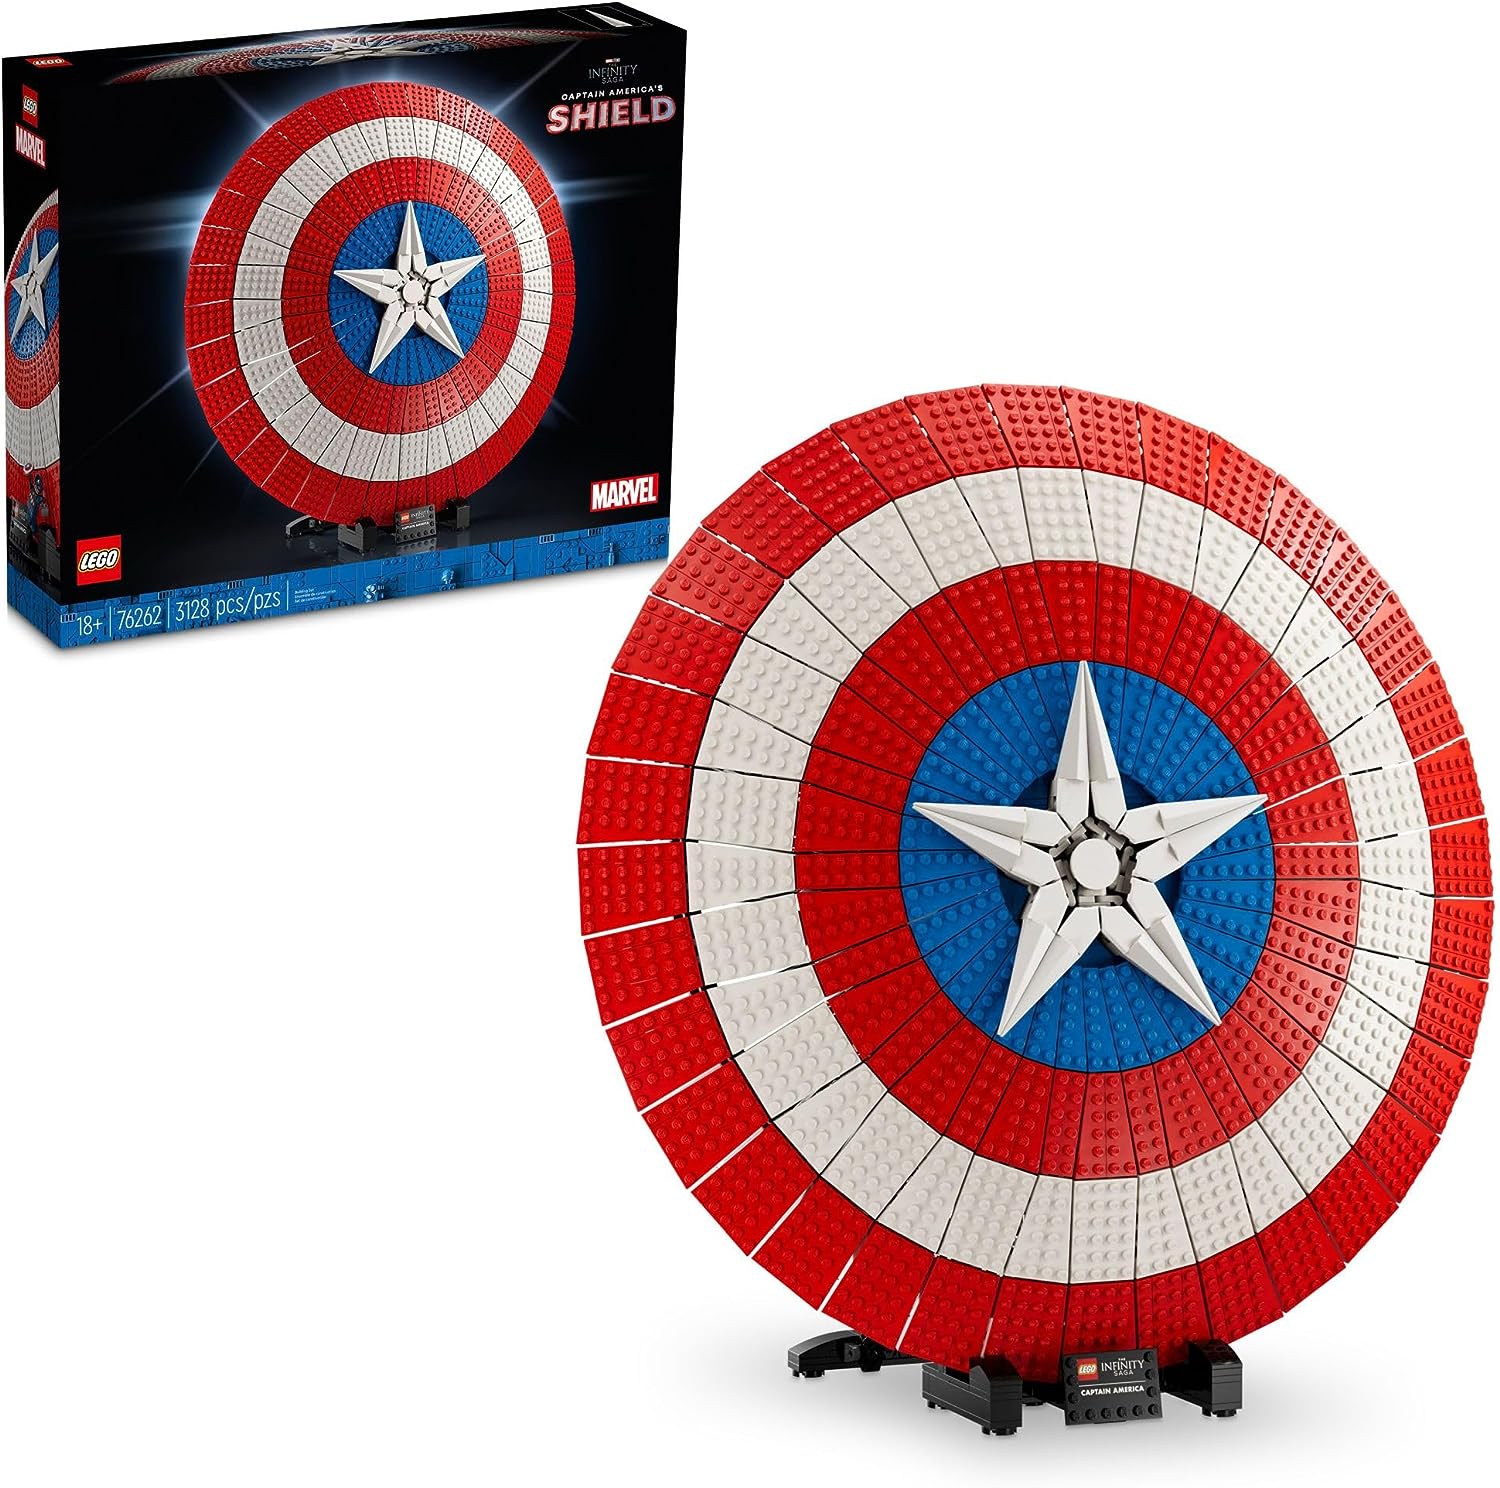 LEGO Marvel Captain America’s Shield 76262 Model Kit for Adults - $155